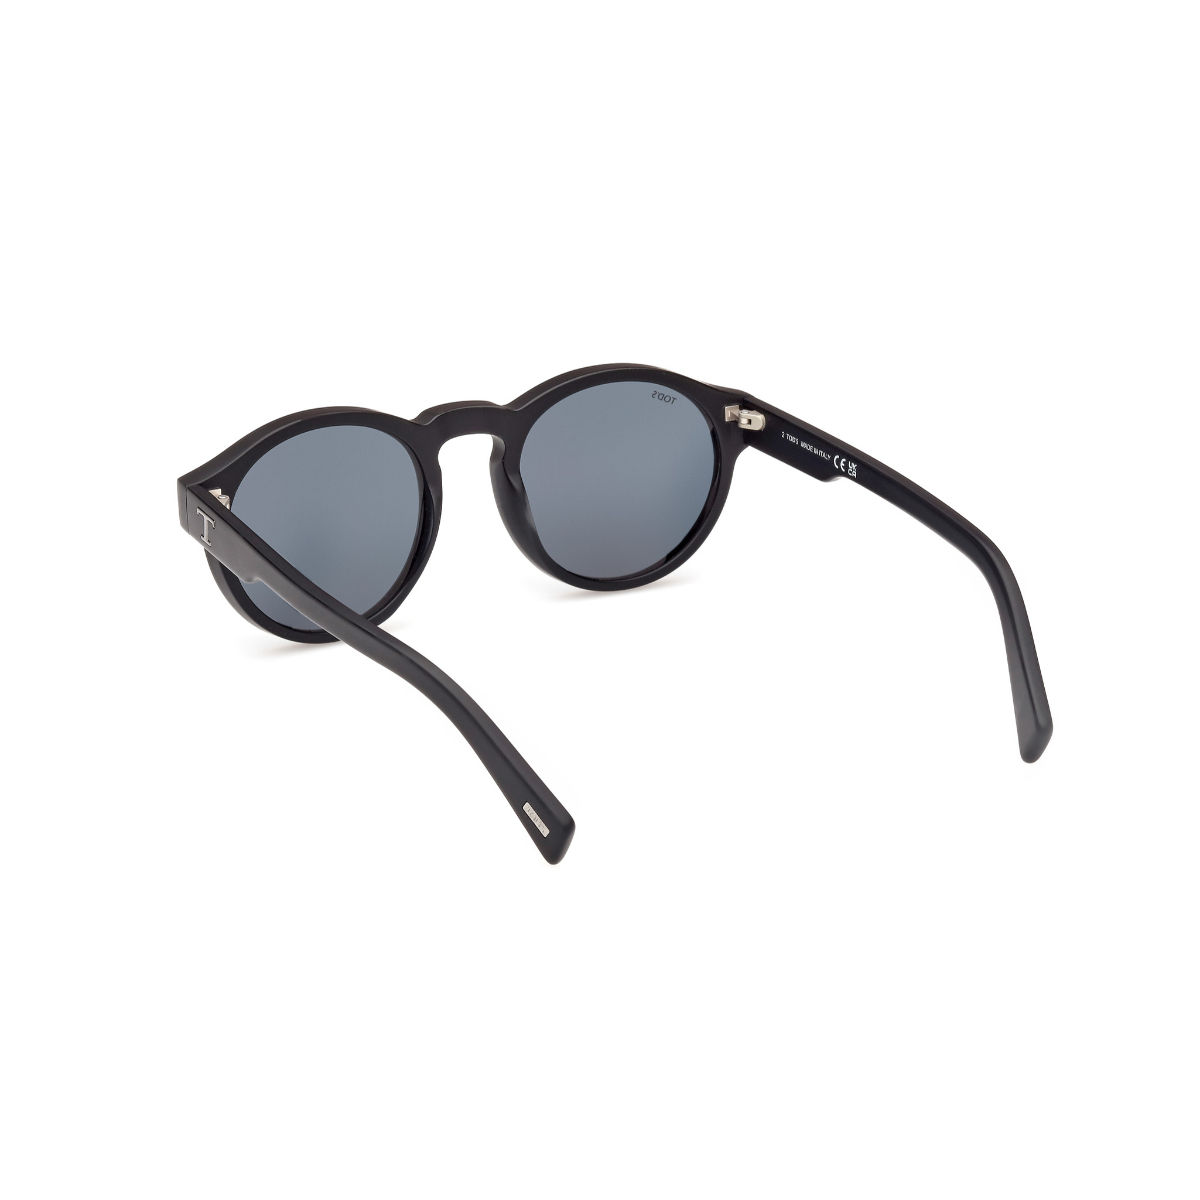 Buy TOD'S Black Acetate Sunglasses (52) Online